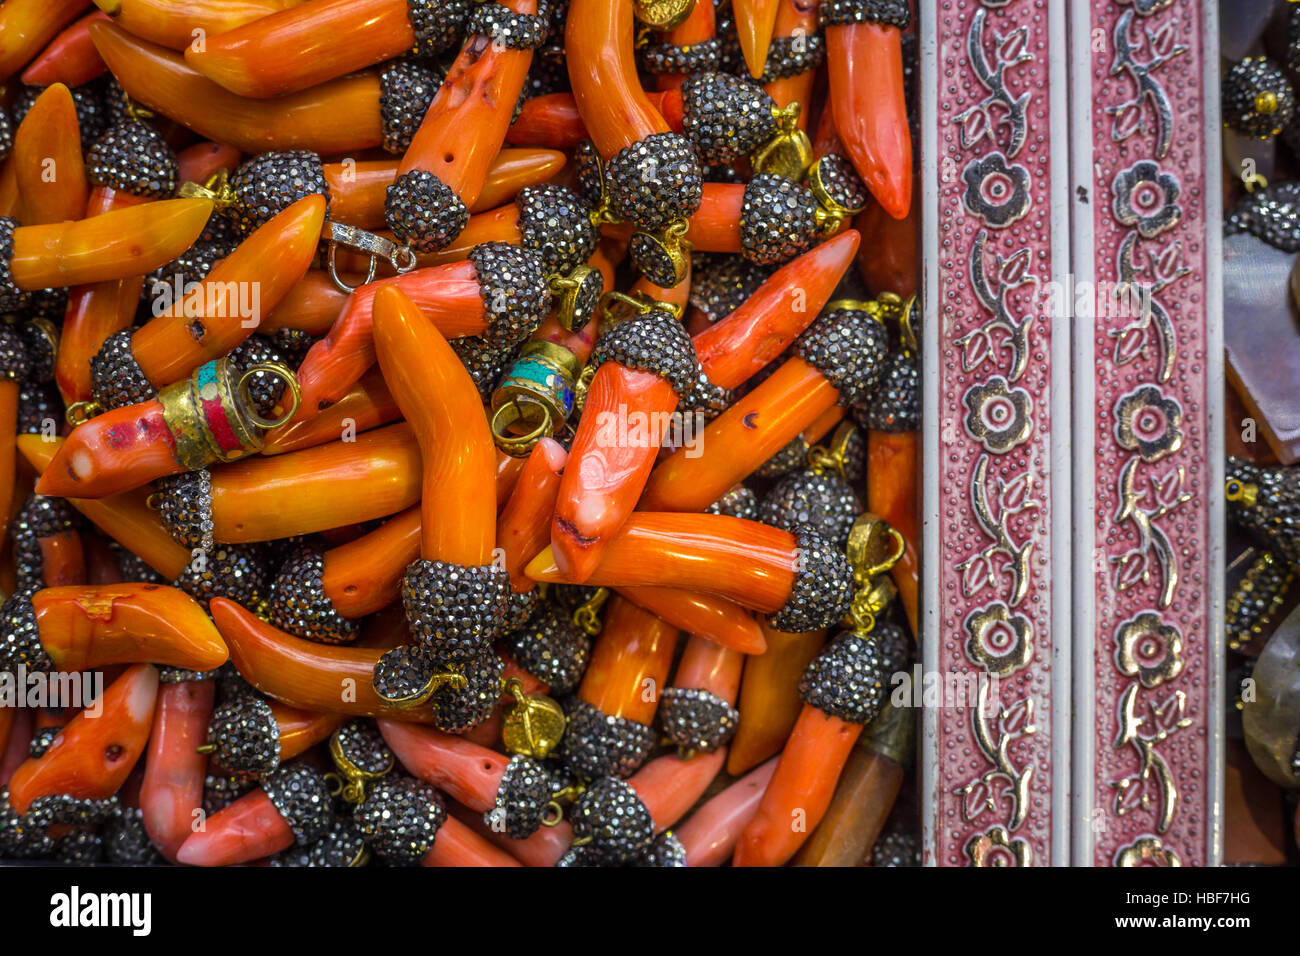 Red chilly peppers dekorative Perlen Schmuck, Basar, Istanbul, Türkei Stockfoto